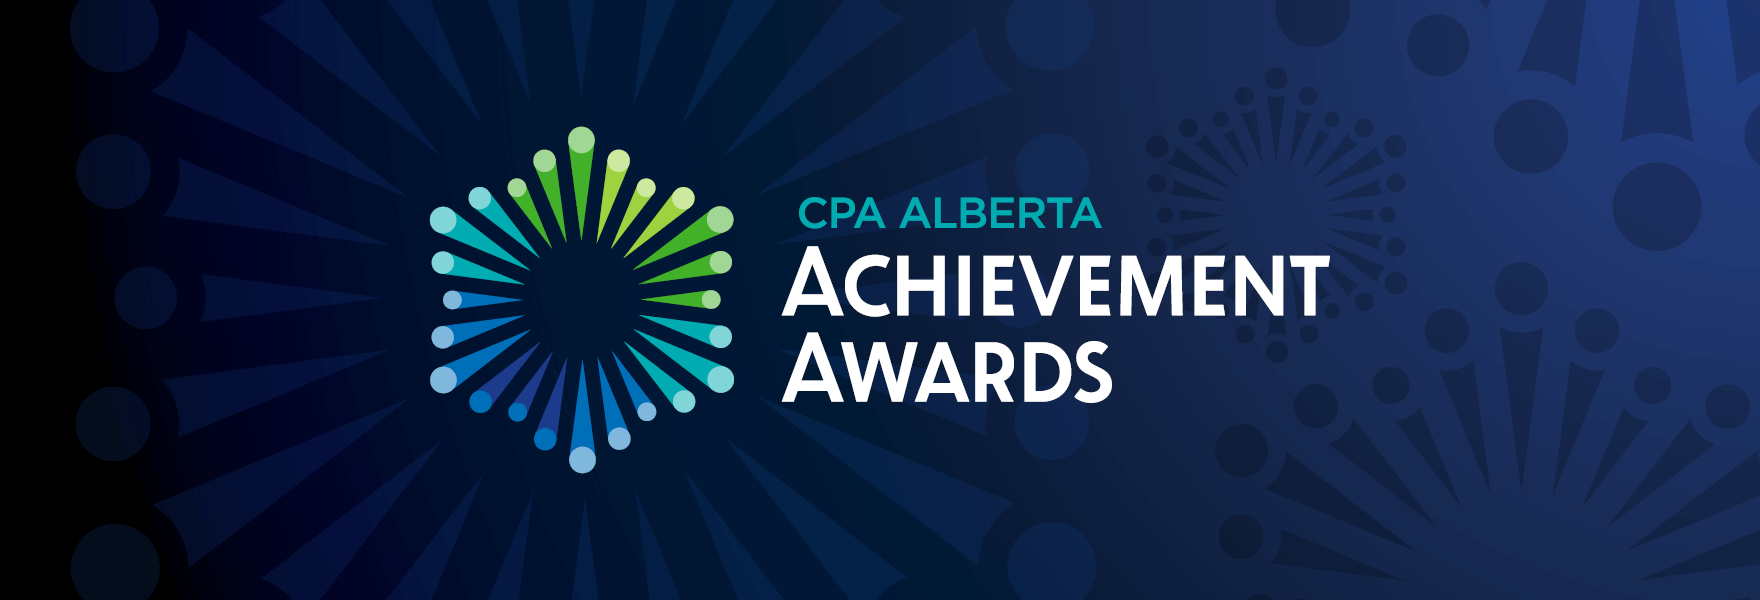 CPA Alberta Achievement Awards